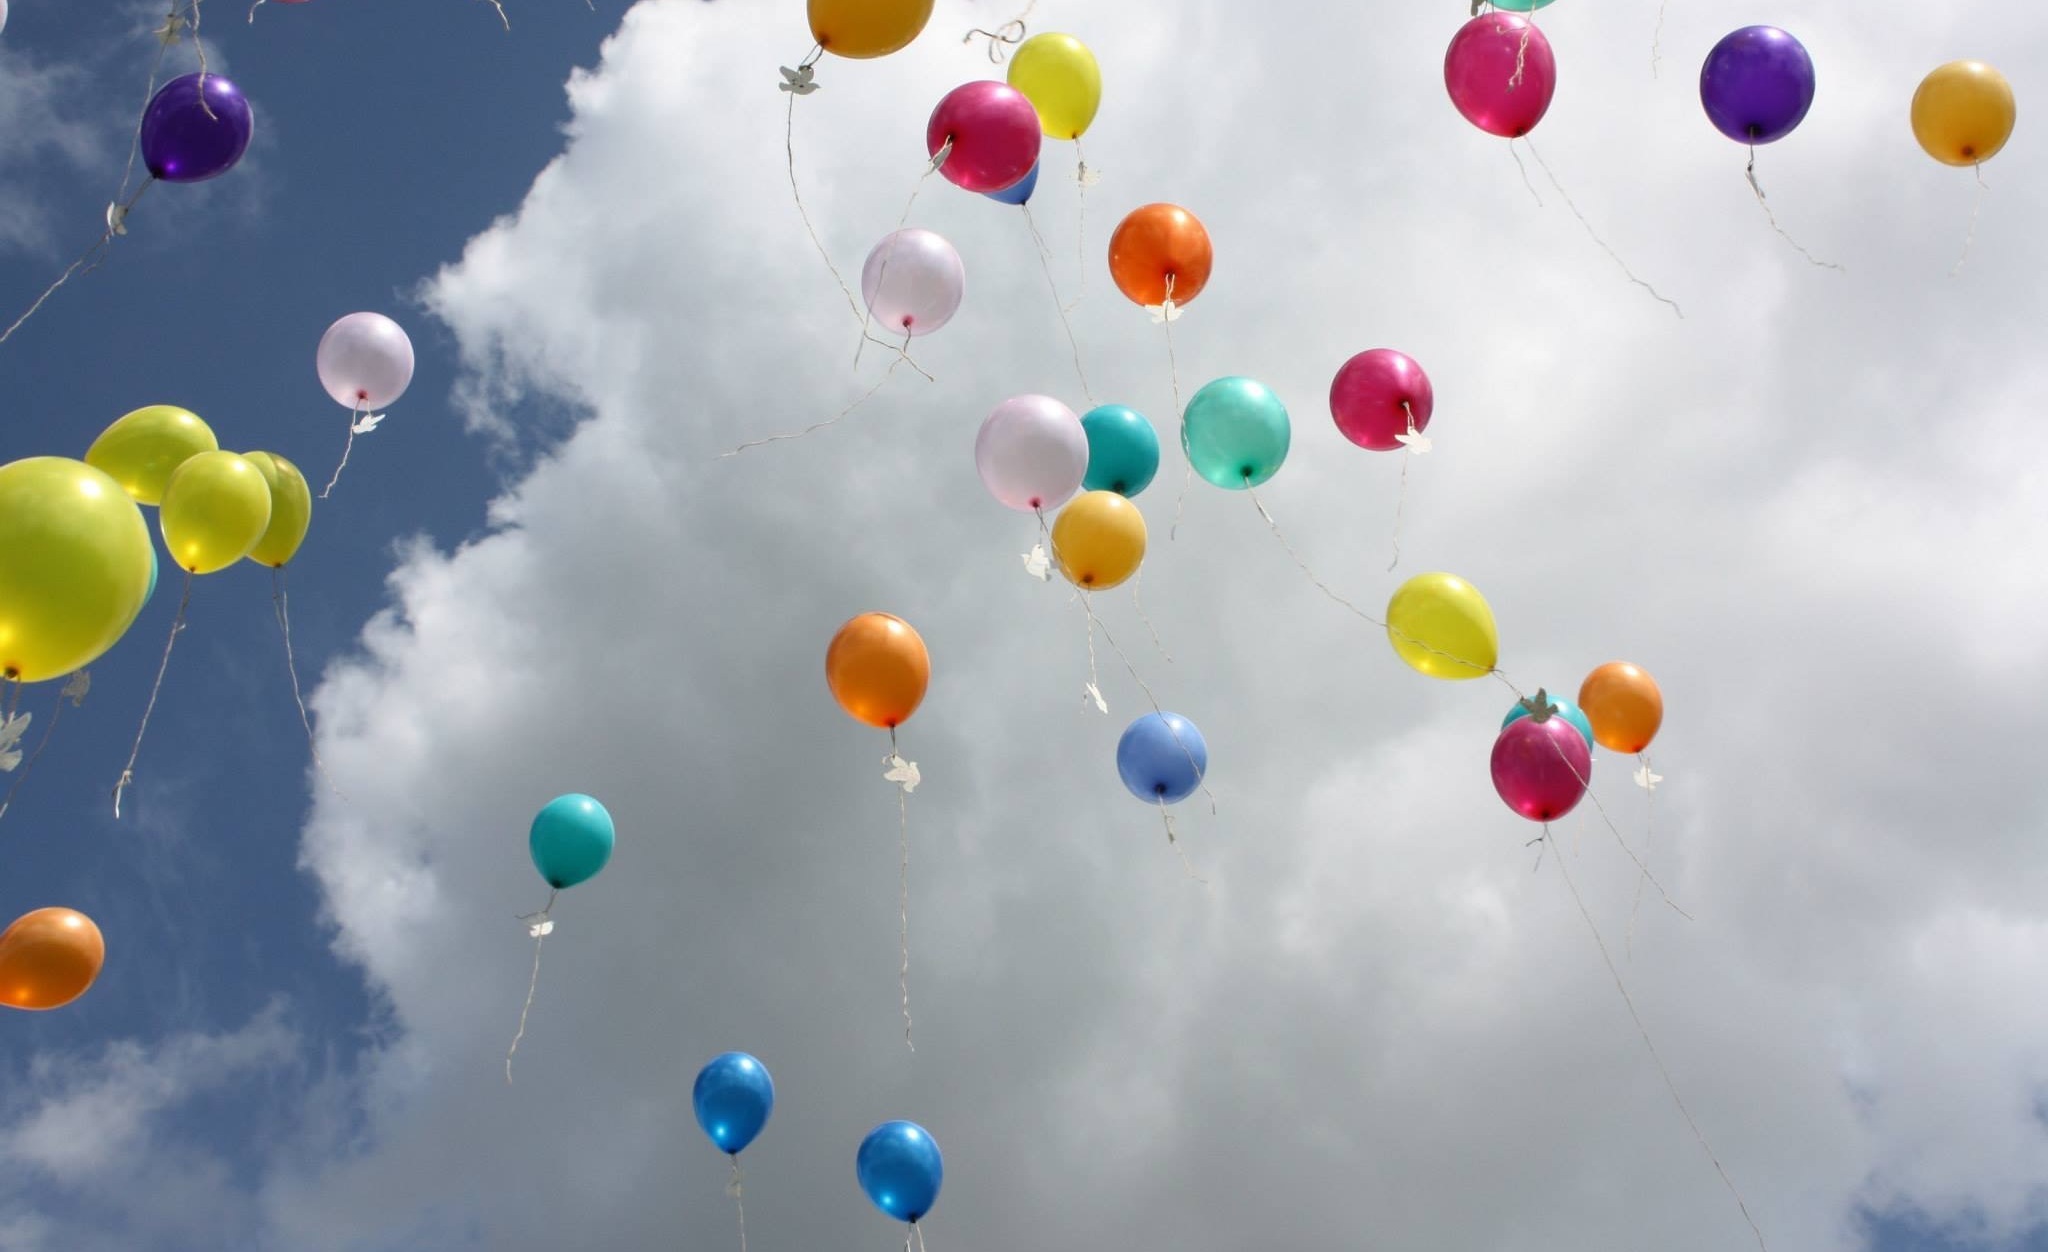 City of Boynton Beach Balloon and Confetti Ordinance